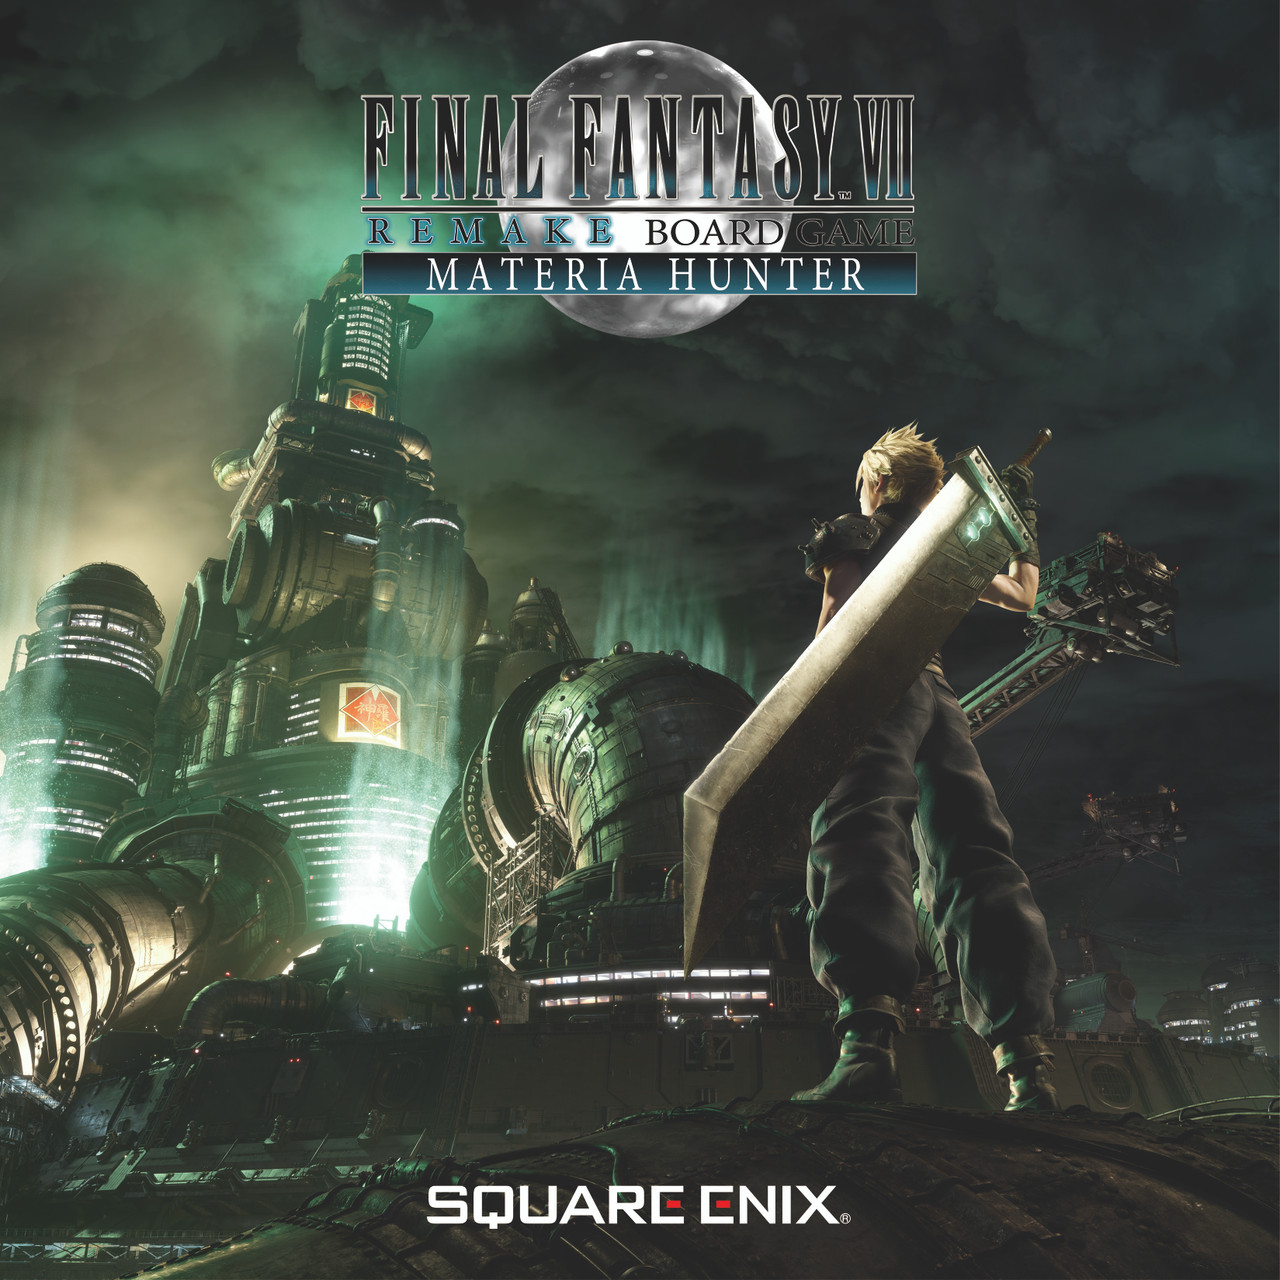 Final Fantasy VII: Remake: Materia Hunter 